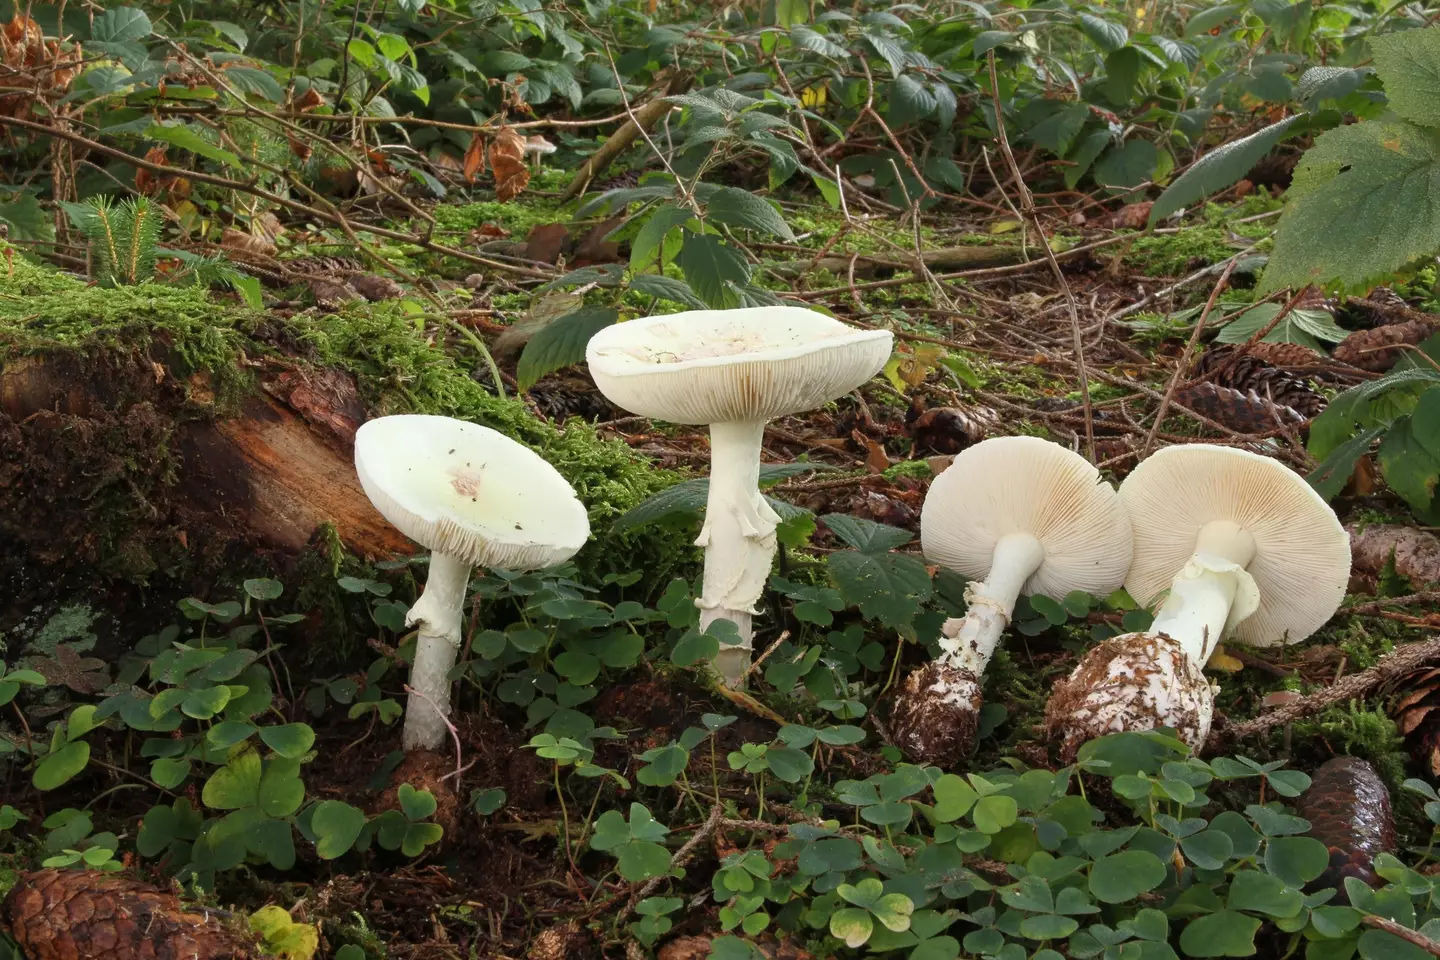 It's suspected the family members ate poisonous death cap mushrooms.